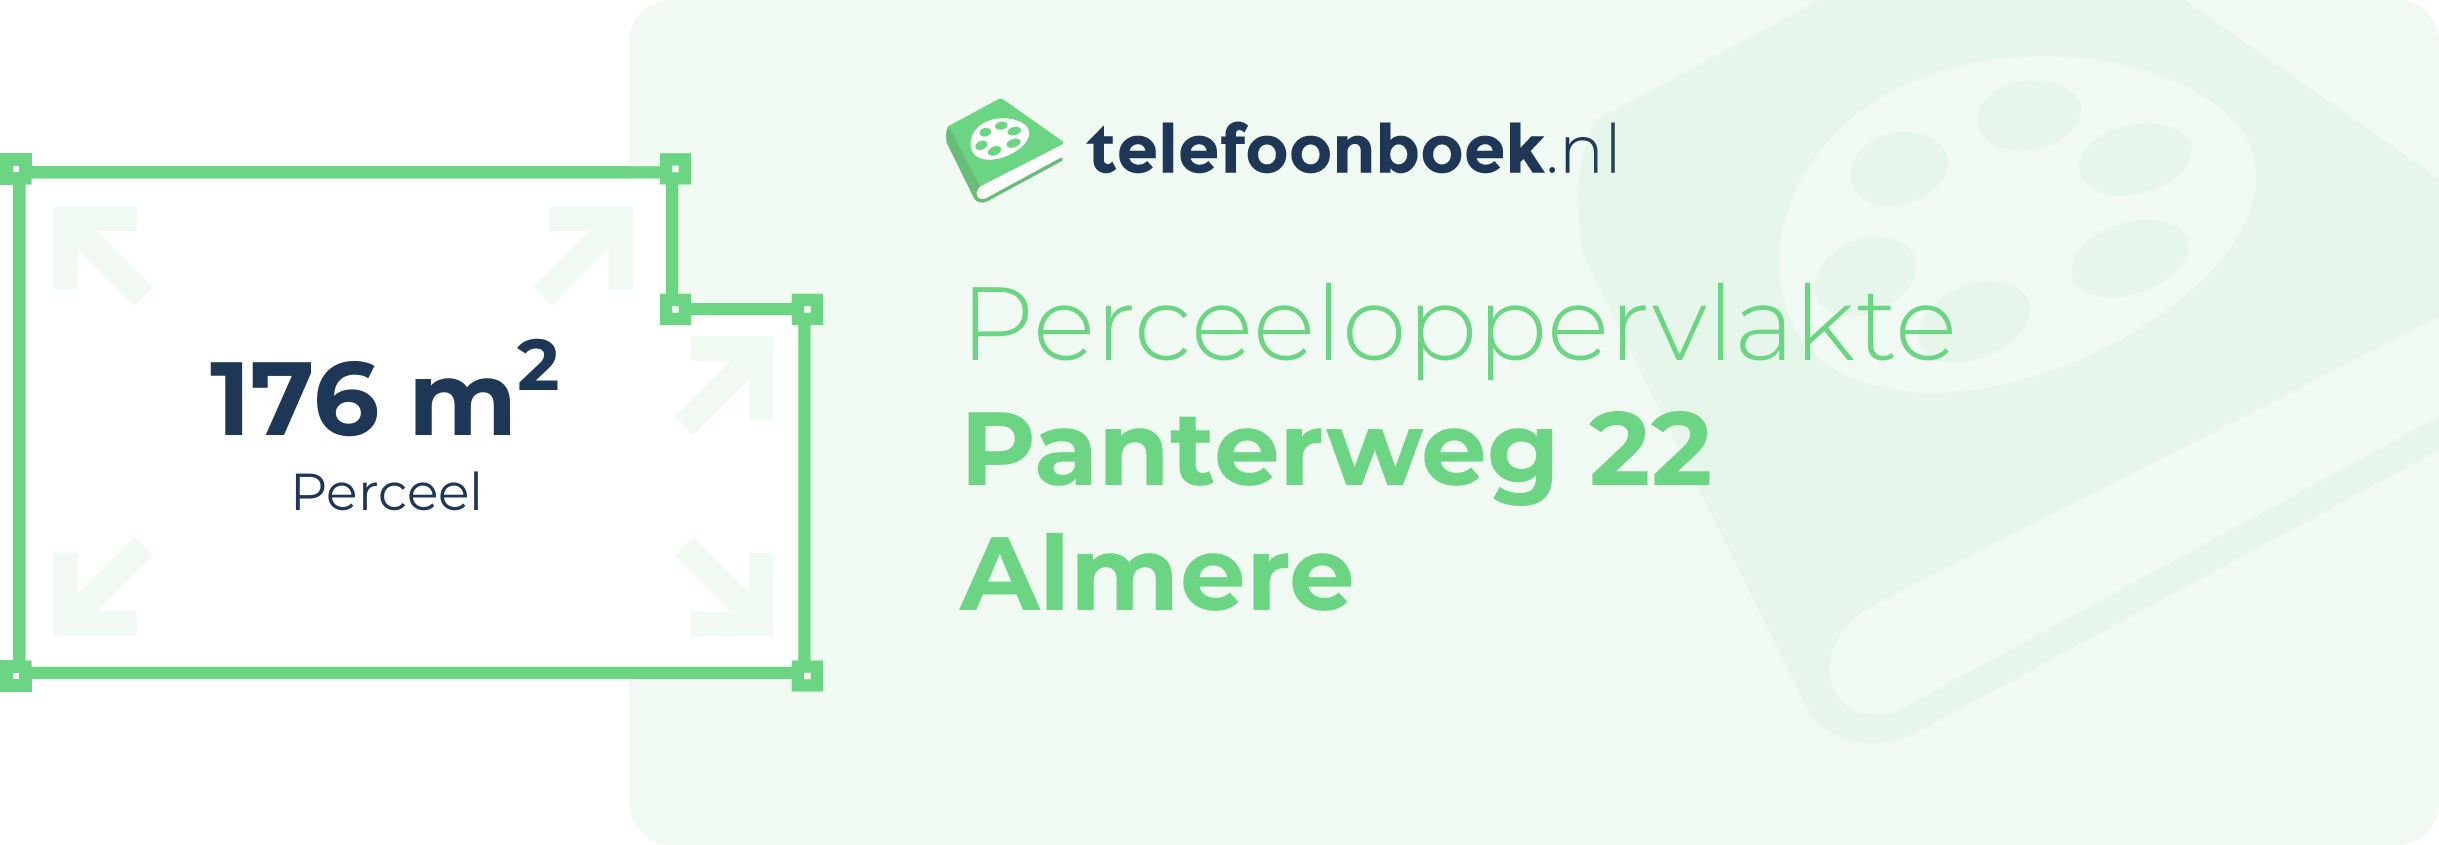 Perceeloppervlakte Panterweg 22 Almere